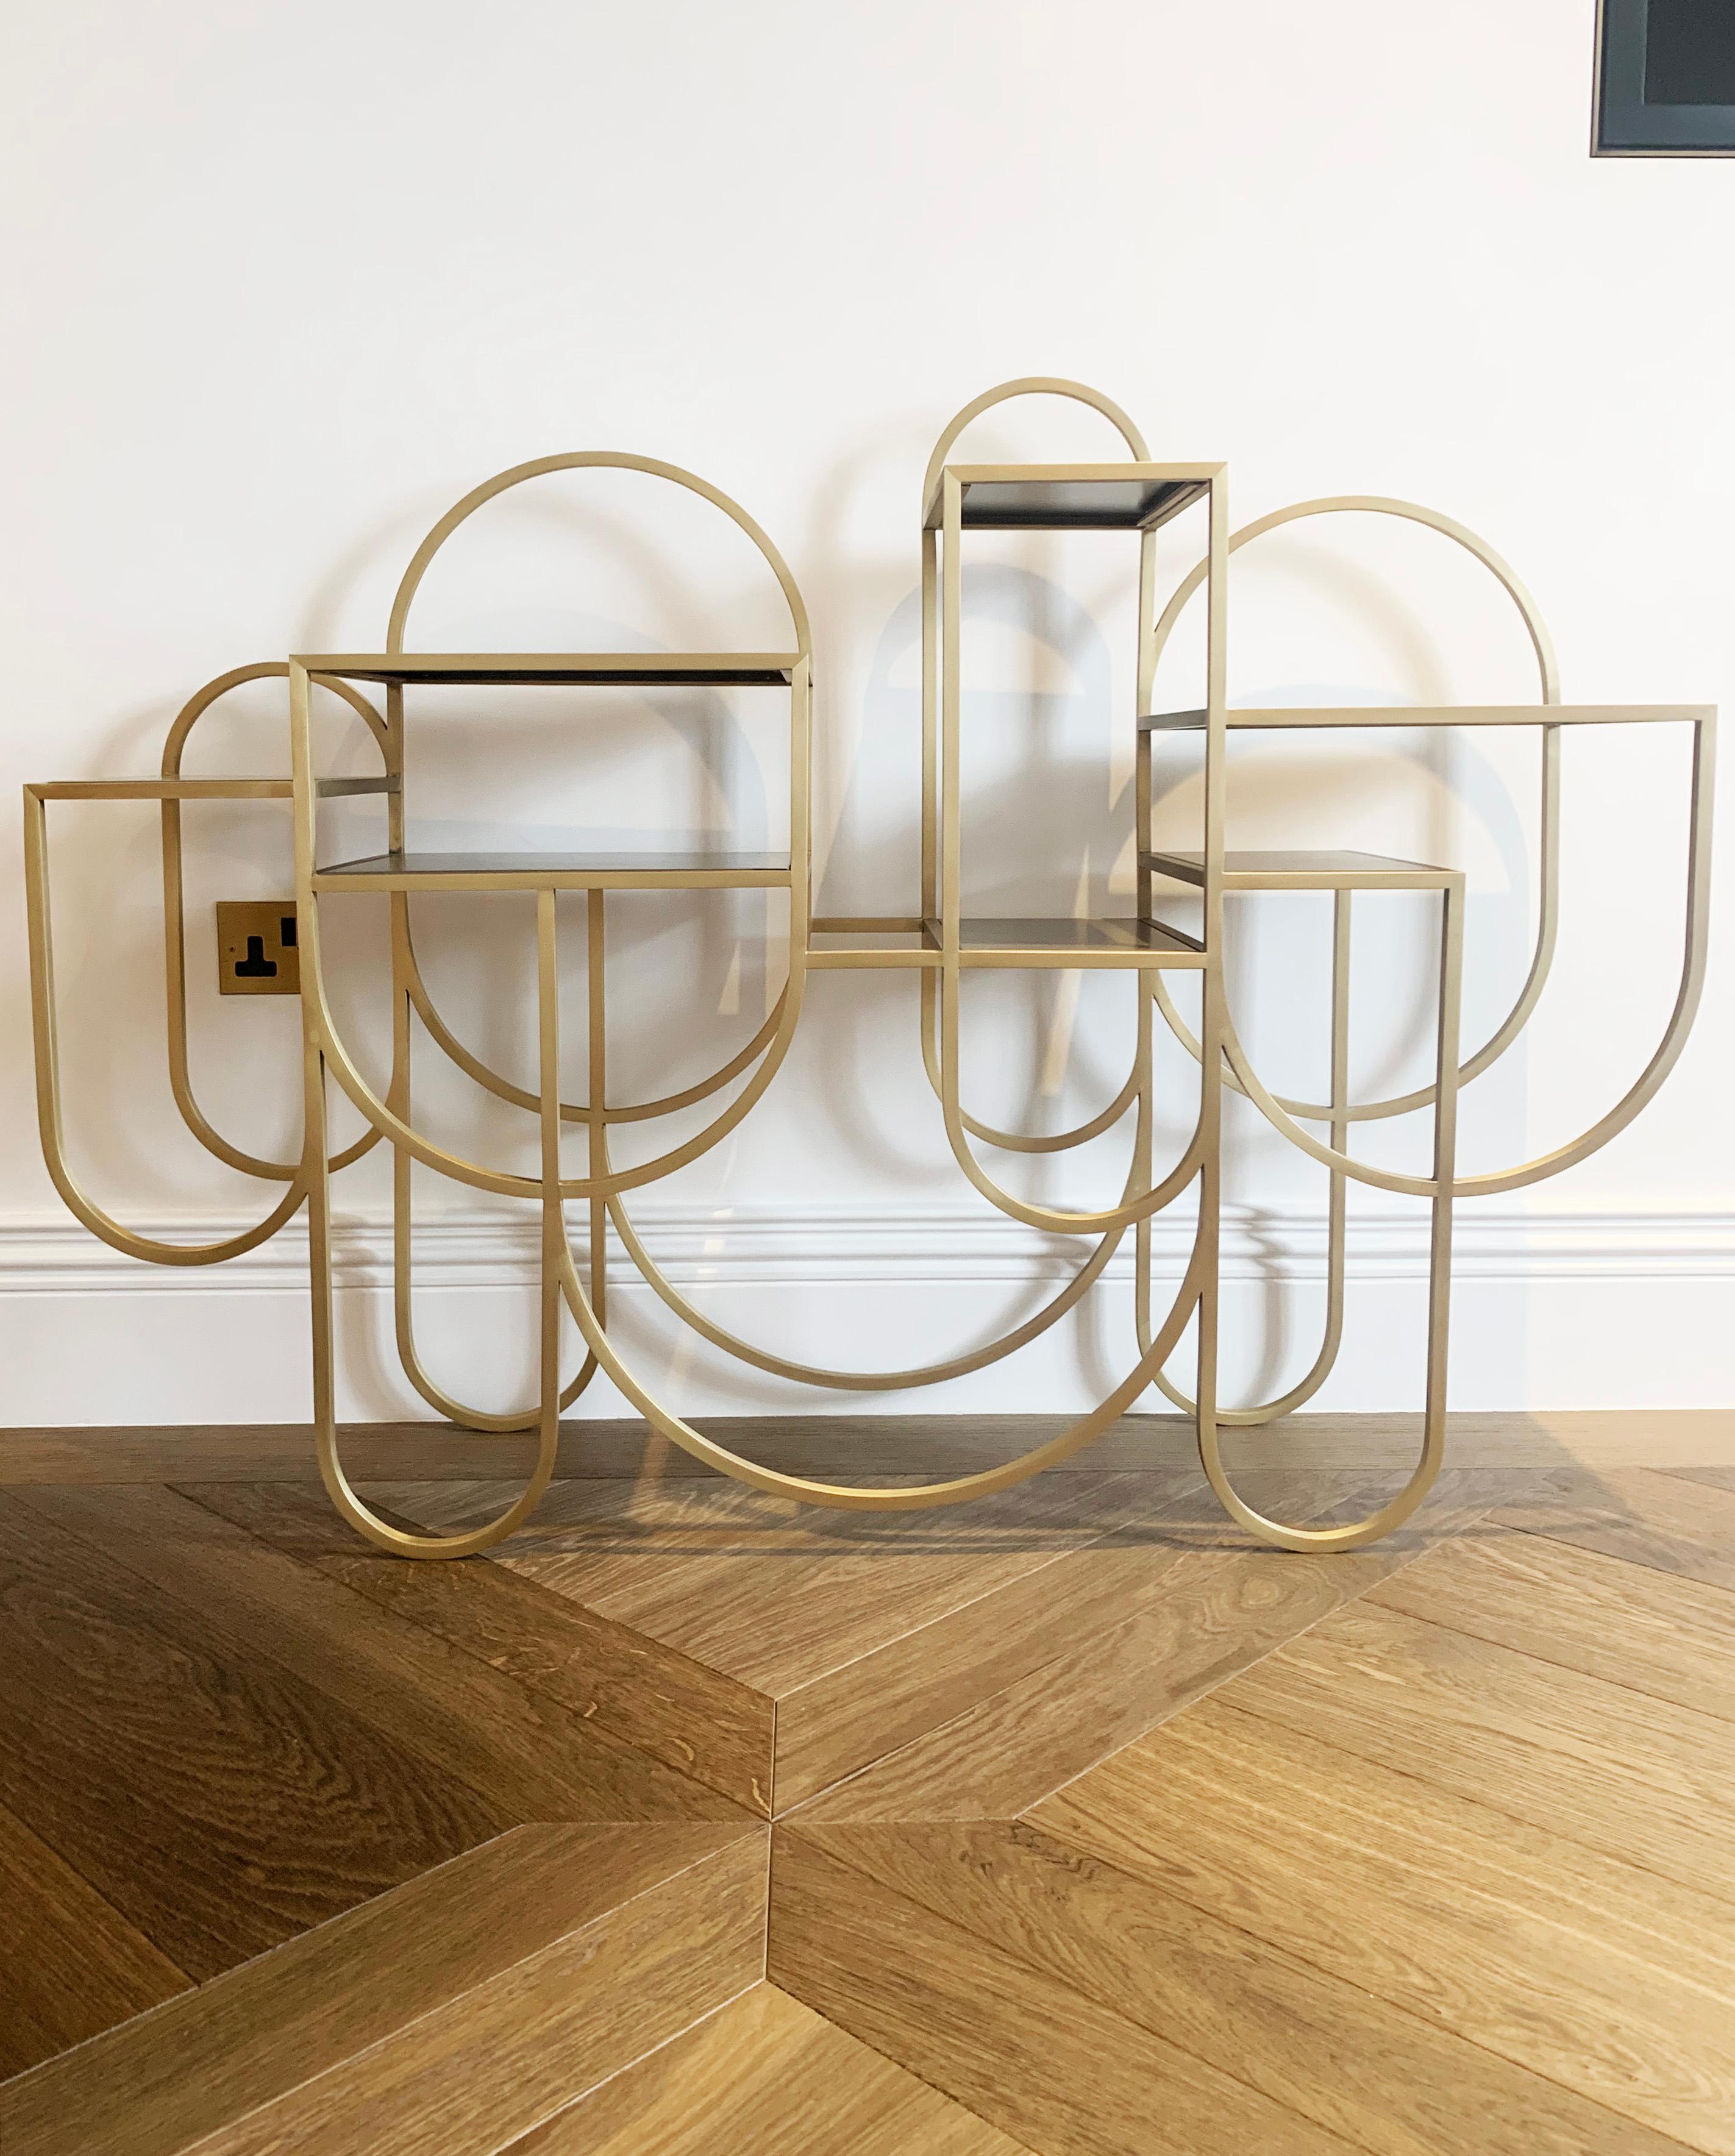 Aluminum Contemporary Console Table - Gold Metal Finish - Bauhaus Style - Lara Bohinc